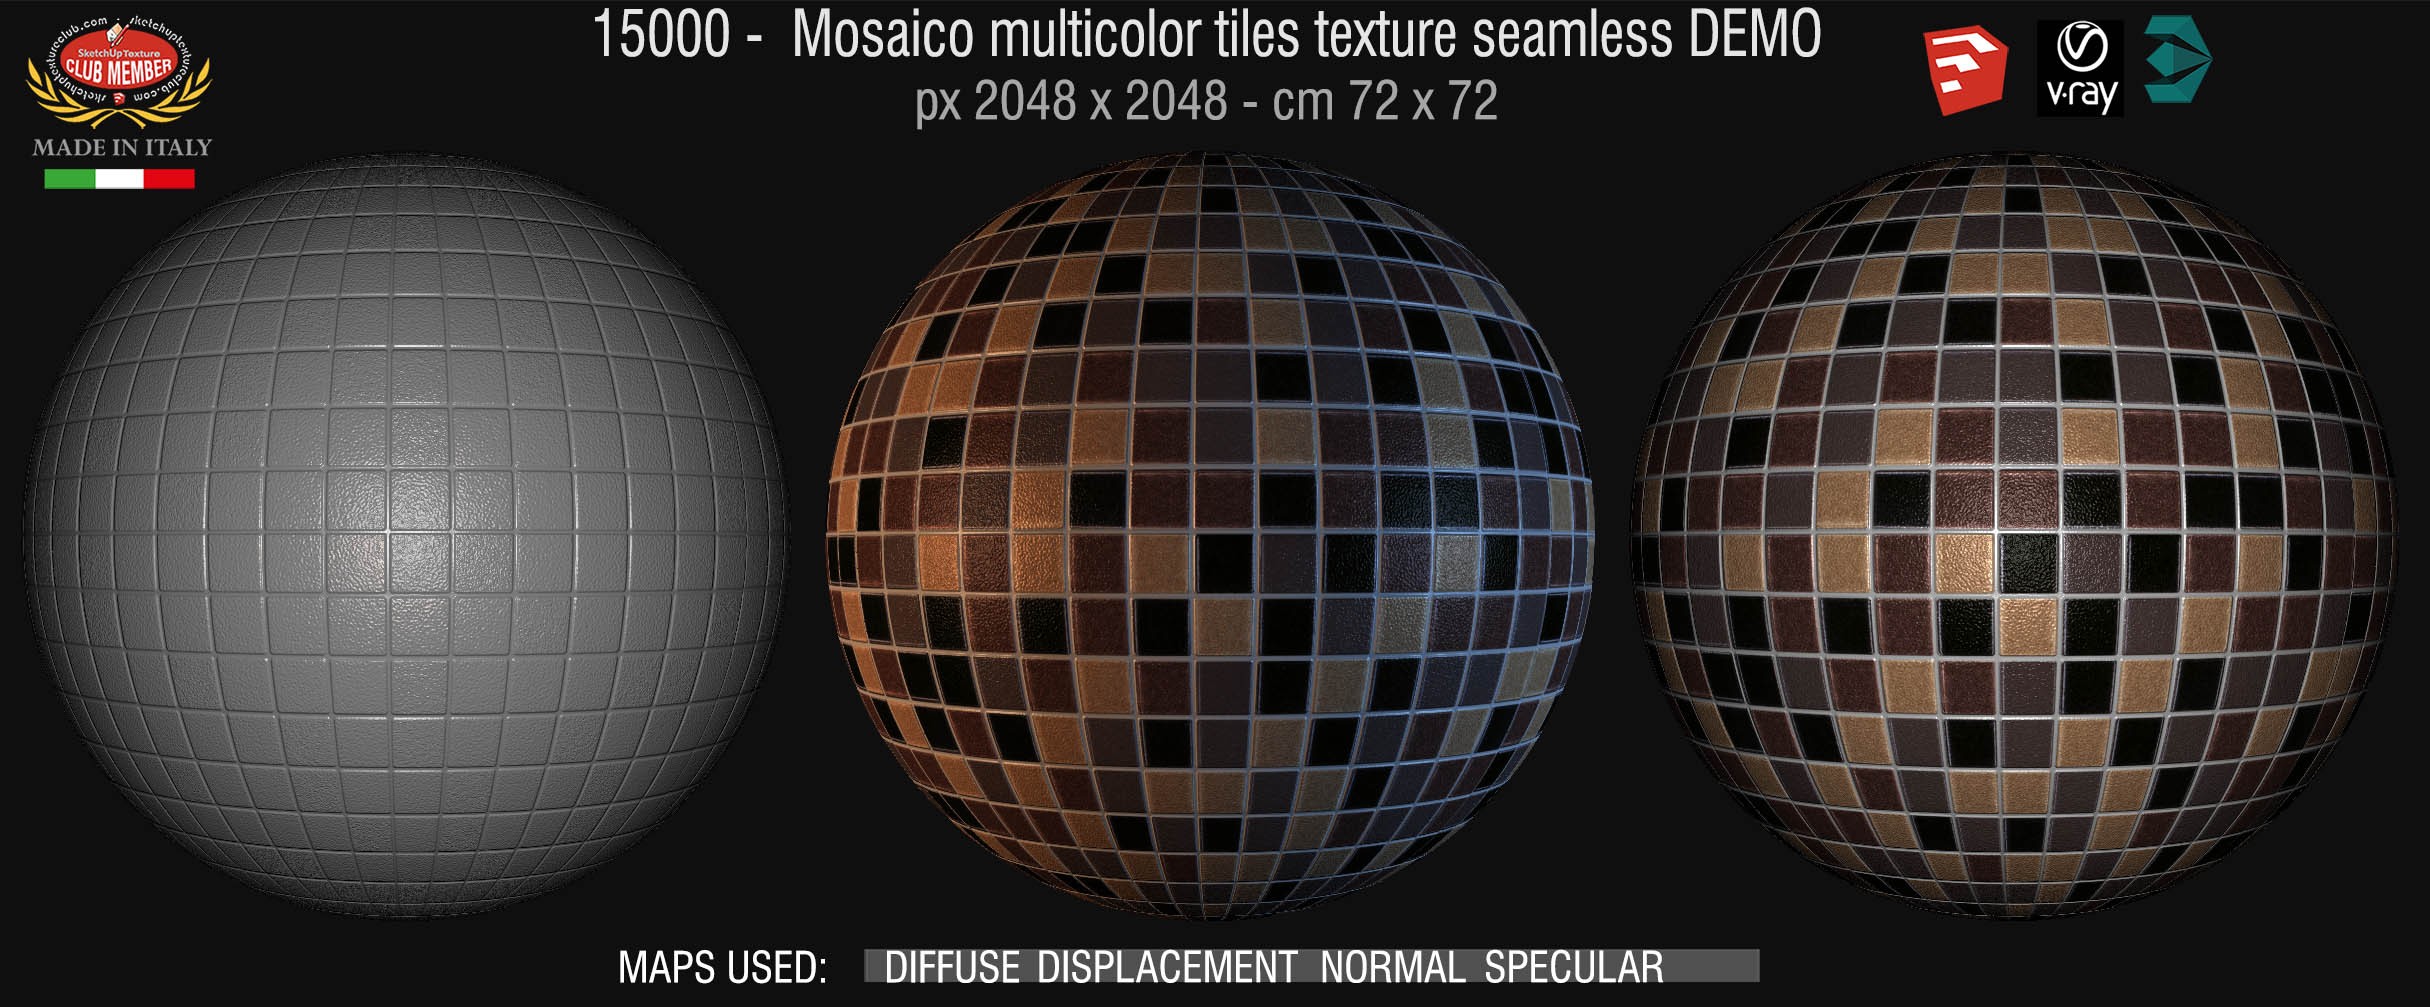 15000 Mosaico multicolor tiles texture seamless + maps DEMO